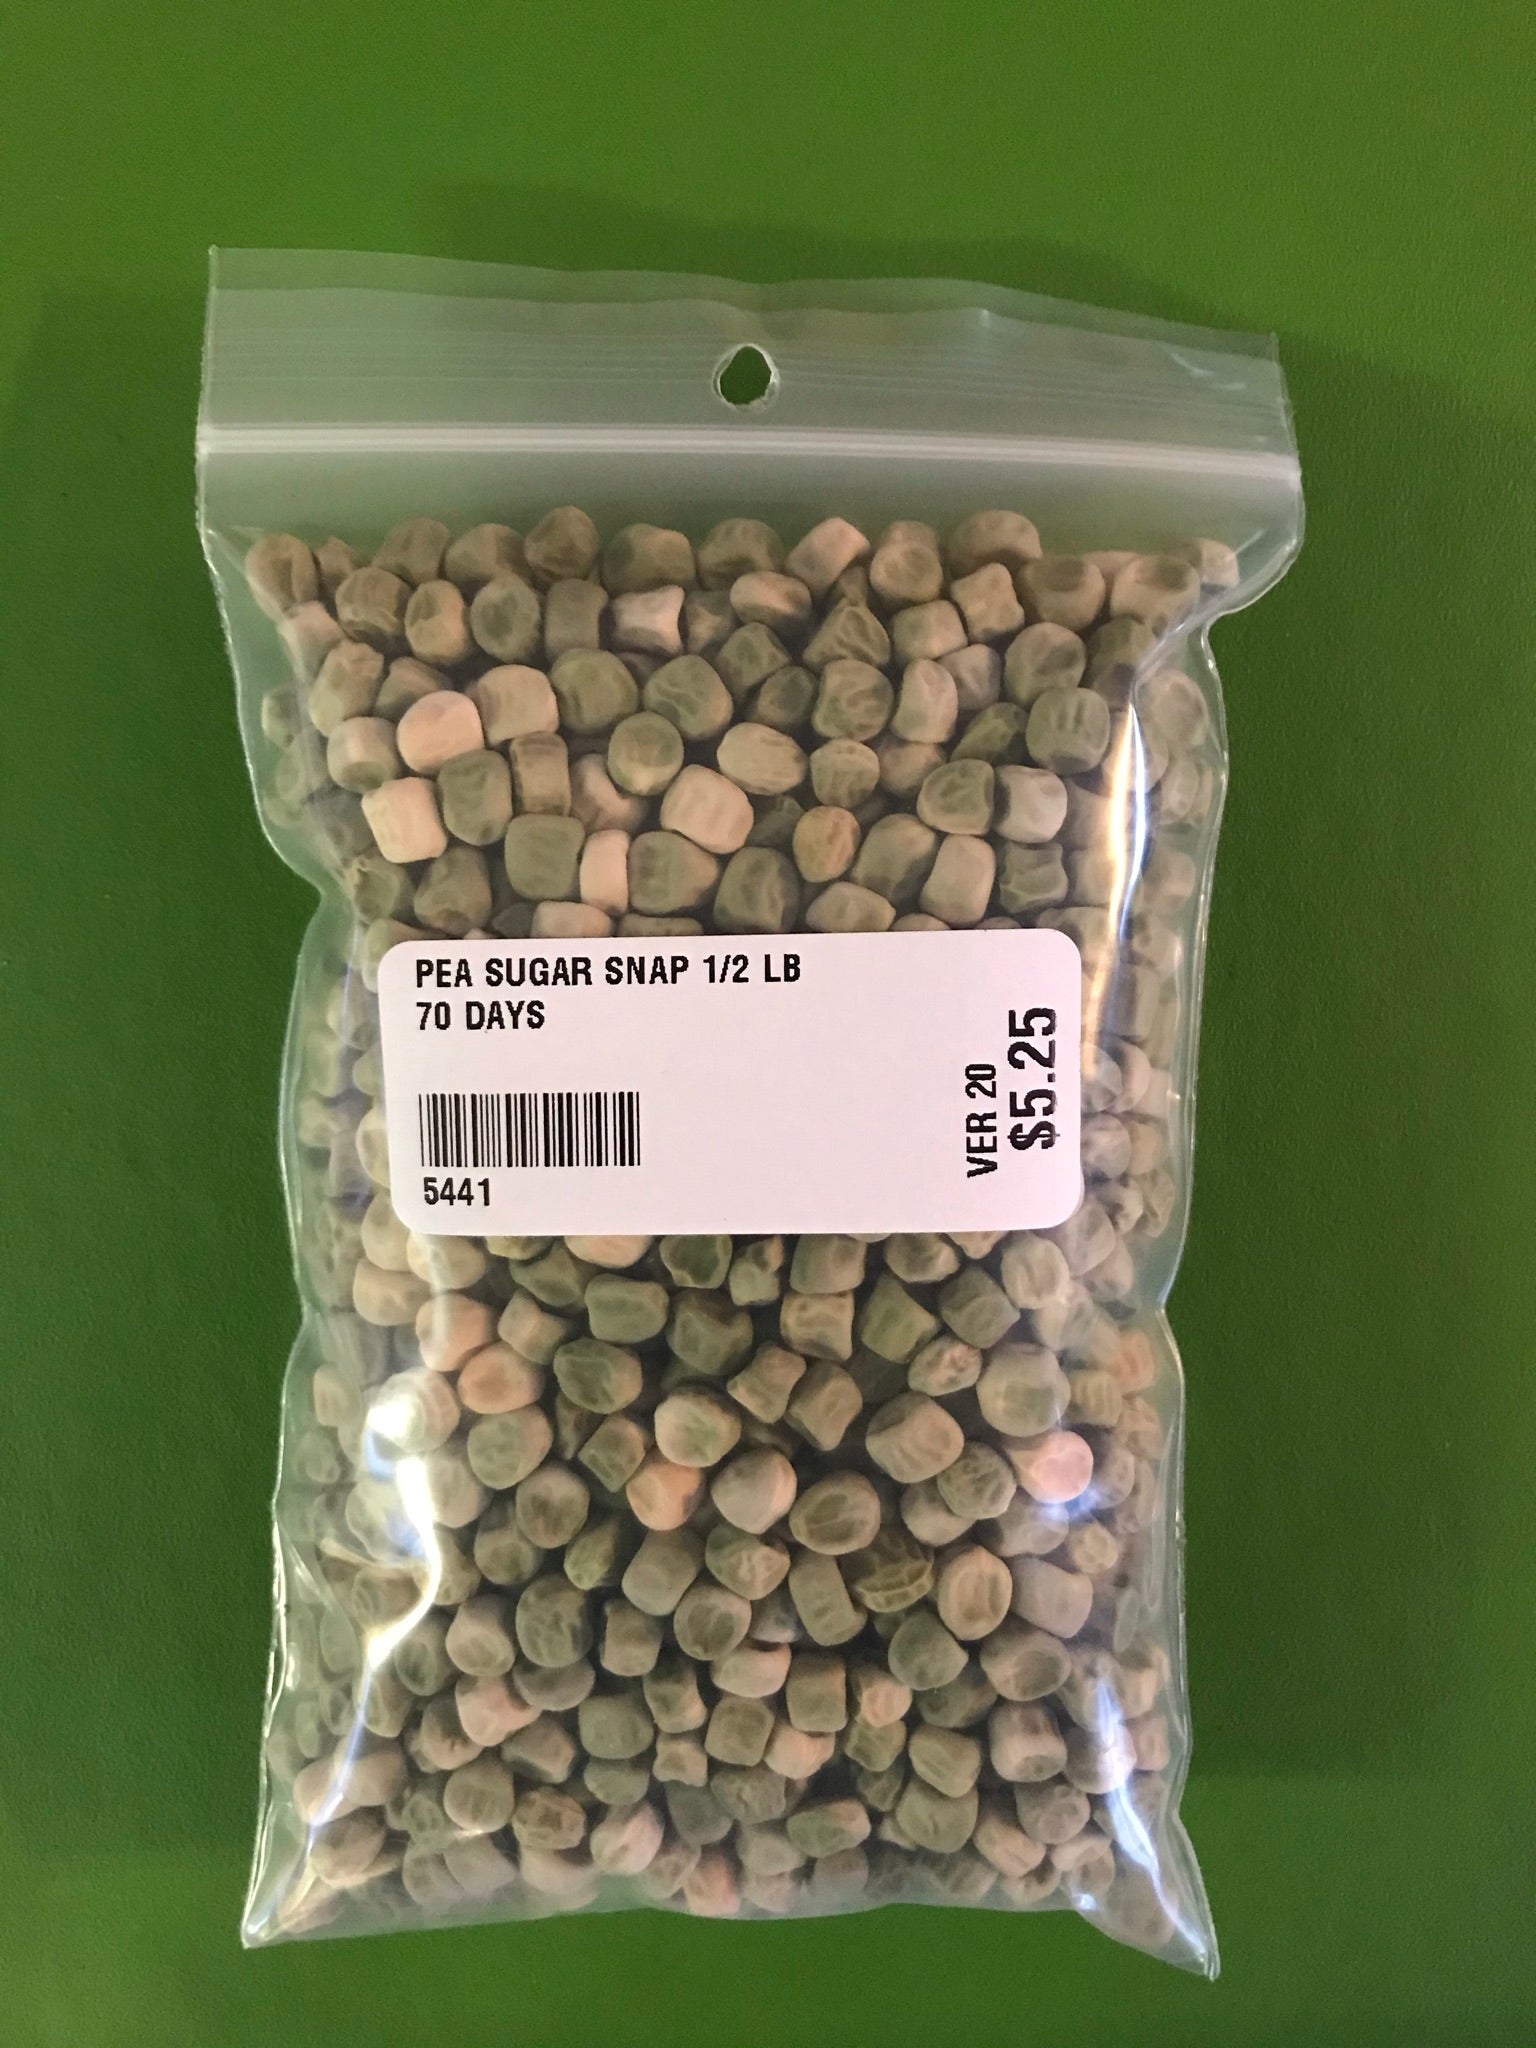 Sugar Snap Pea Seeds (Edible Pod Type) (70 Days) - 1/2 LB - Bulk